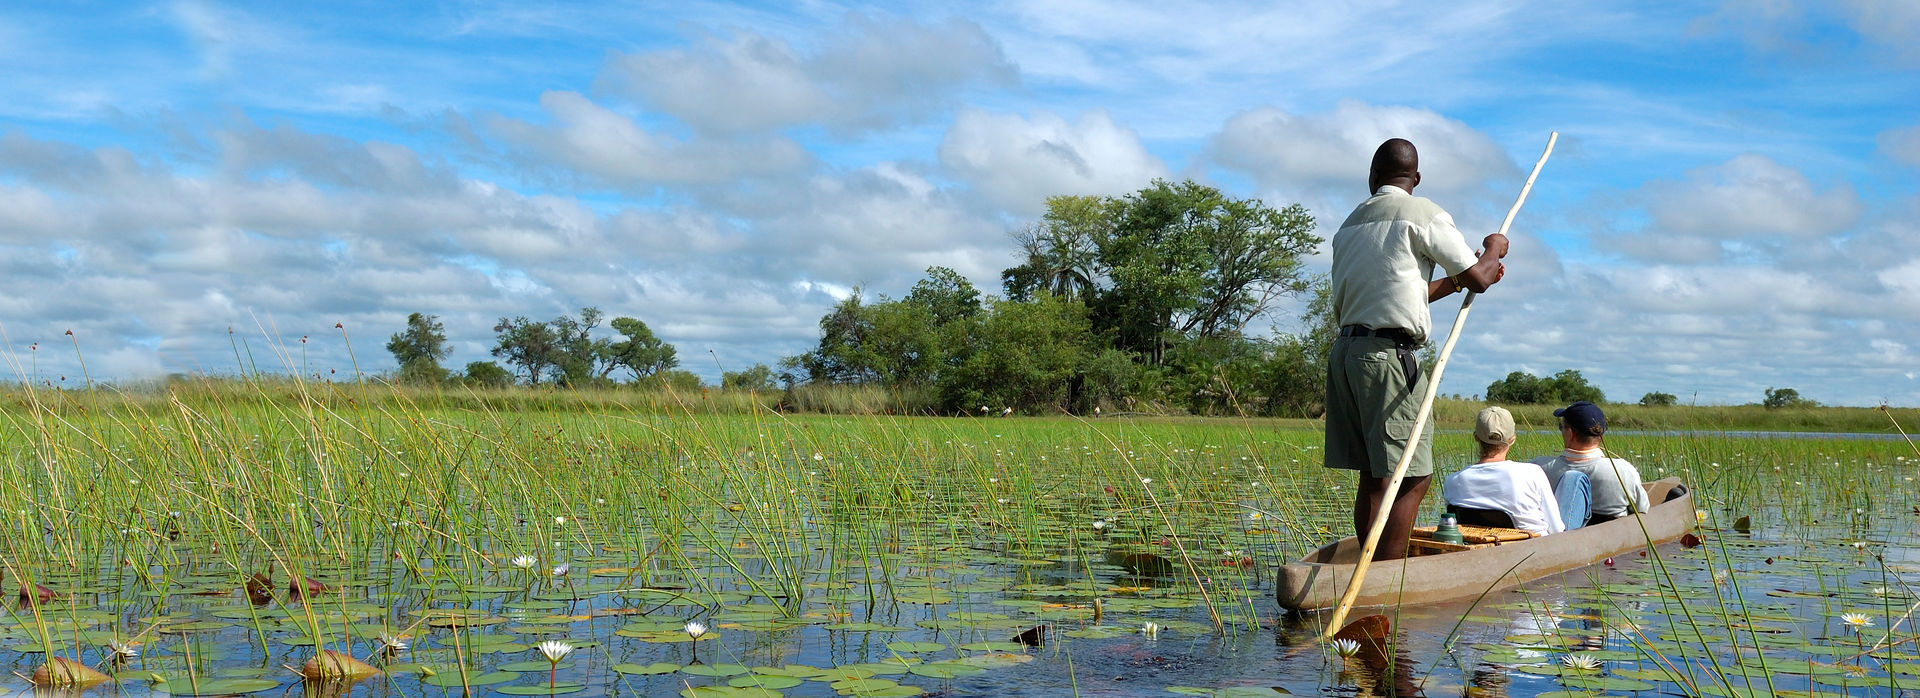 Visiting Botswana's Okavango Delta